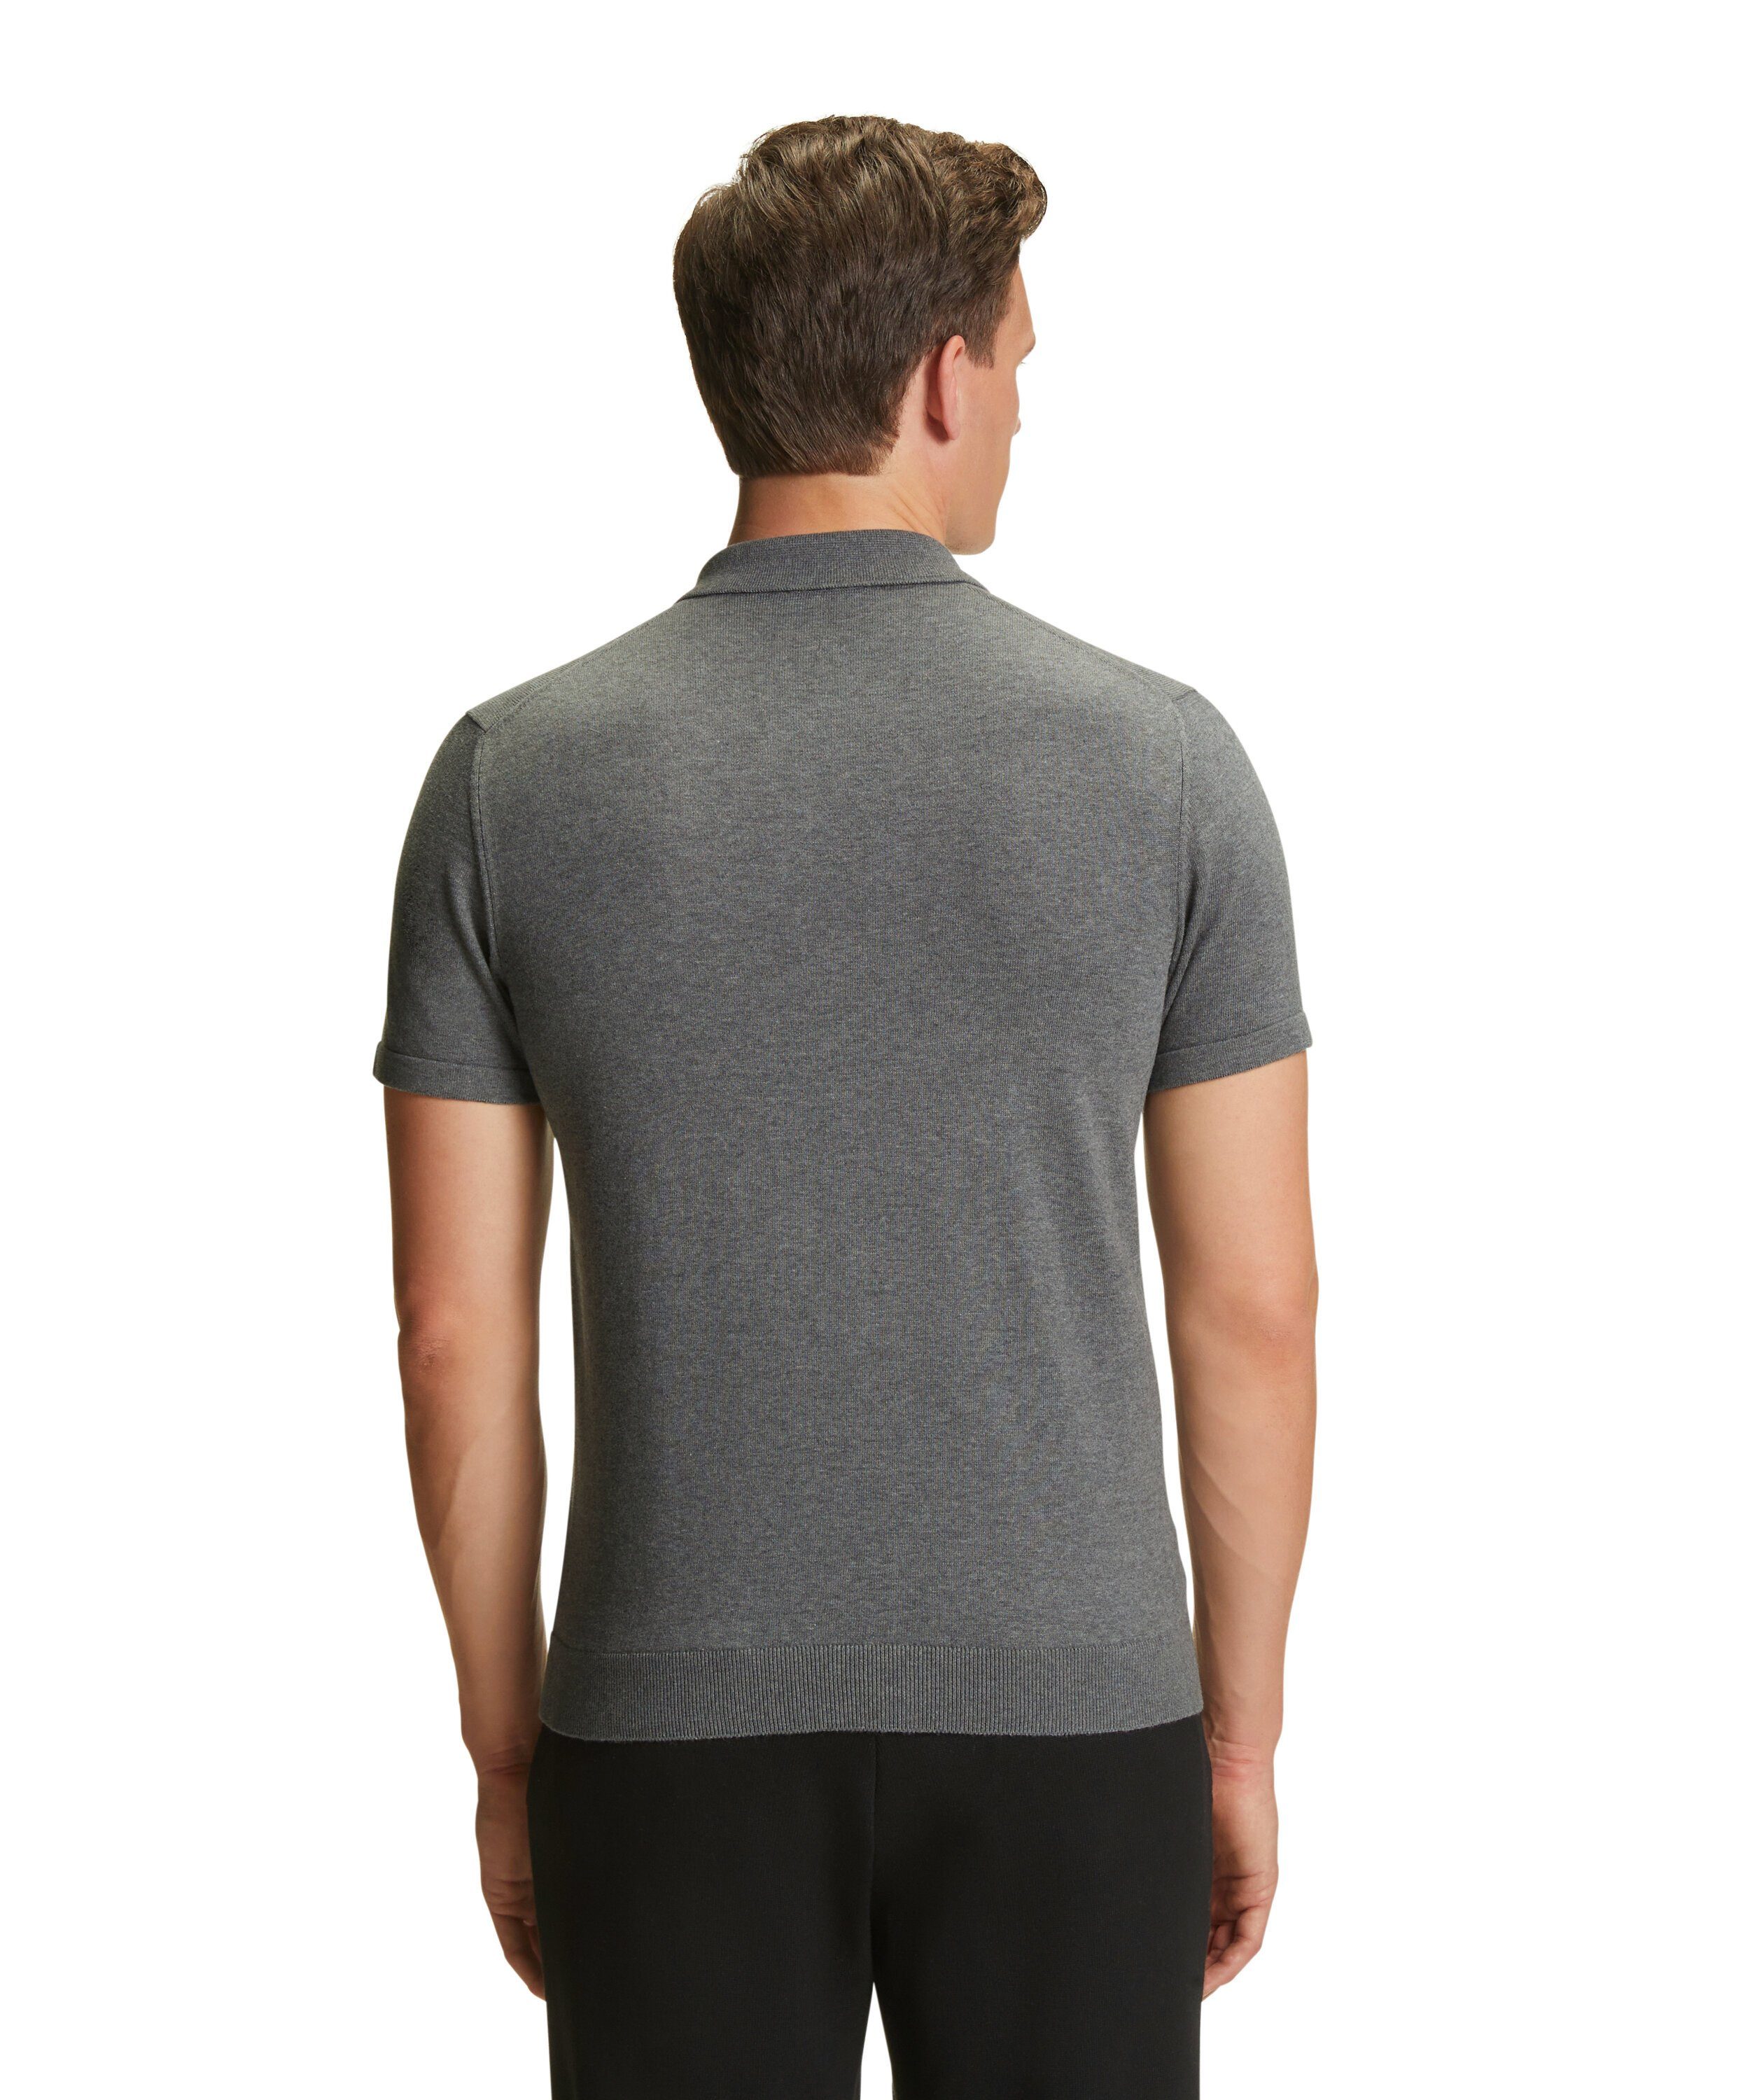 FALKE Poloshirt aus (3390) Baumwolle light greymel. nachhaltiger